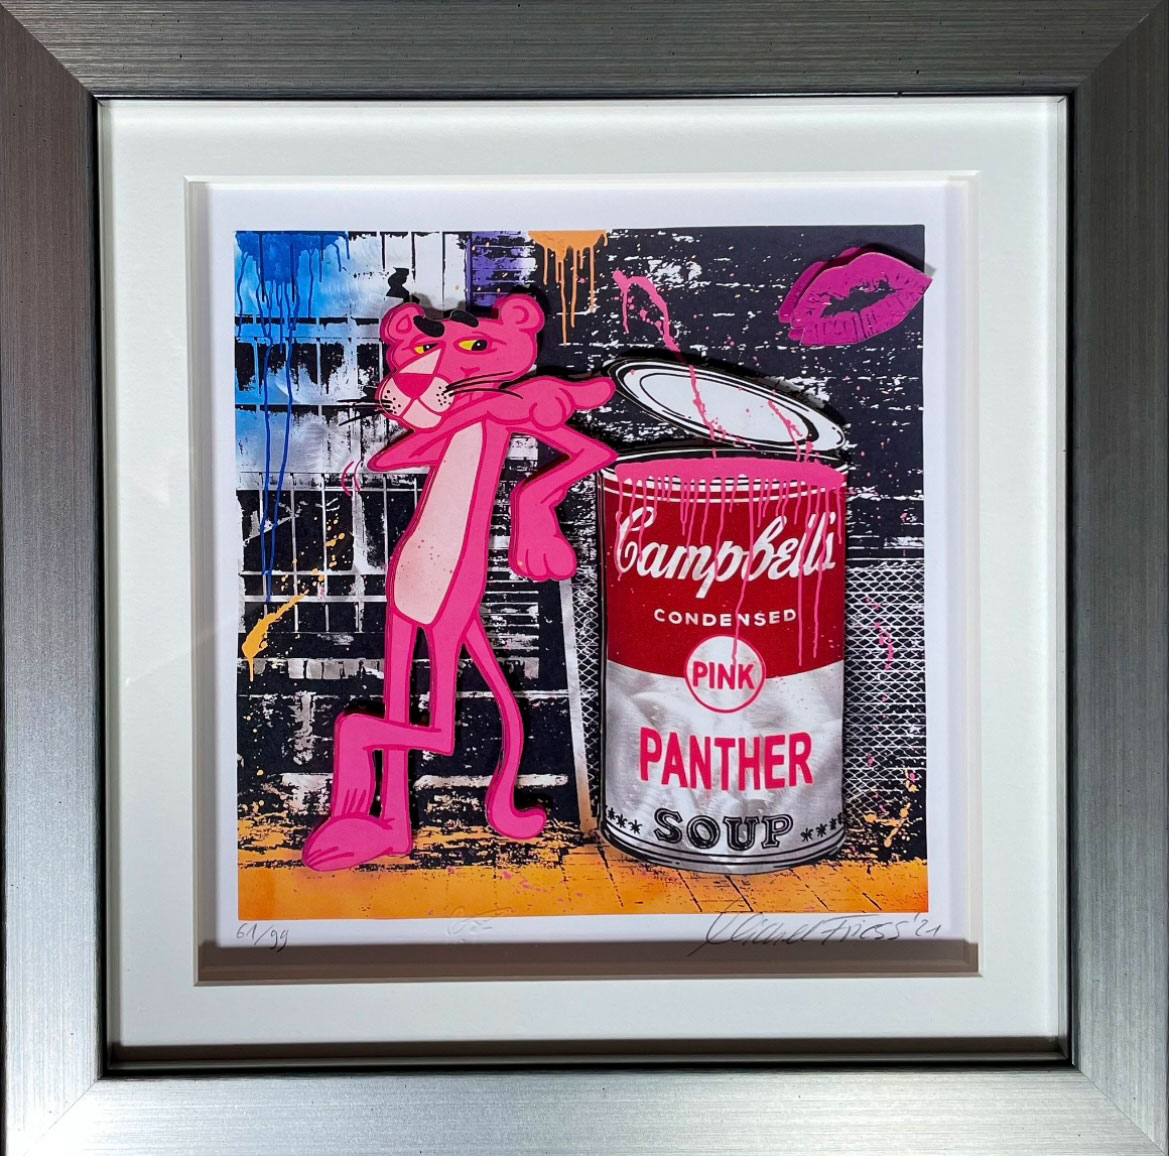 Michel Friess "Pink Panther 3D"